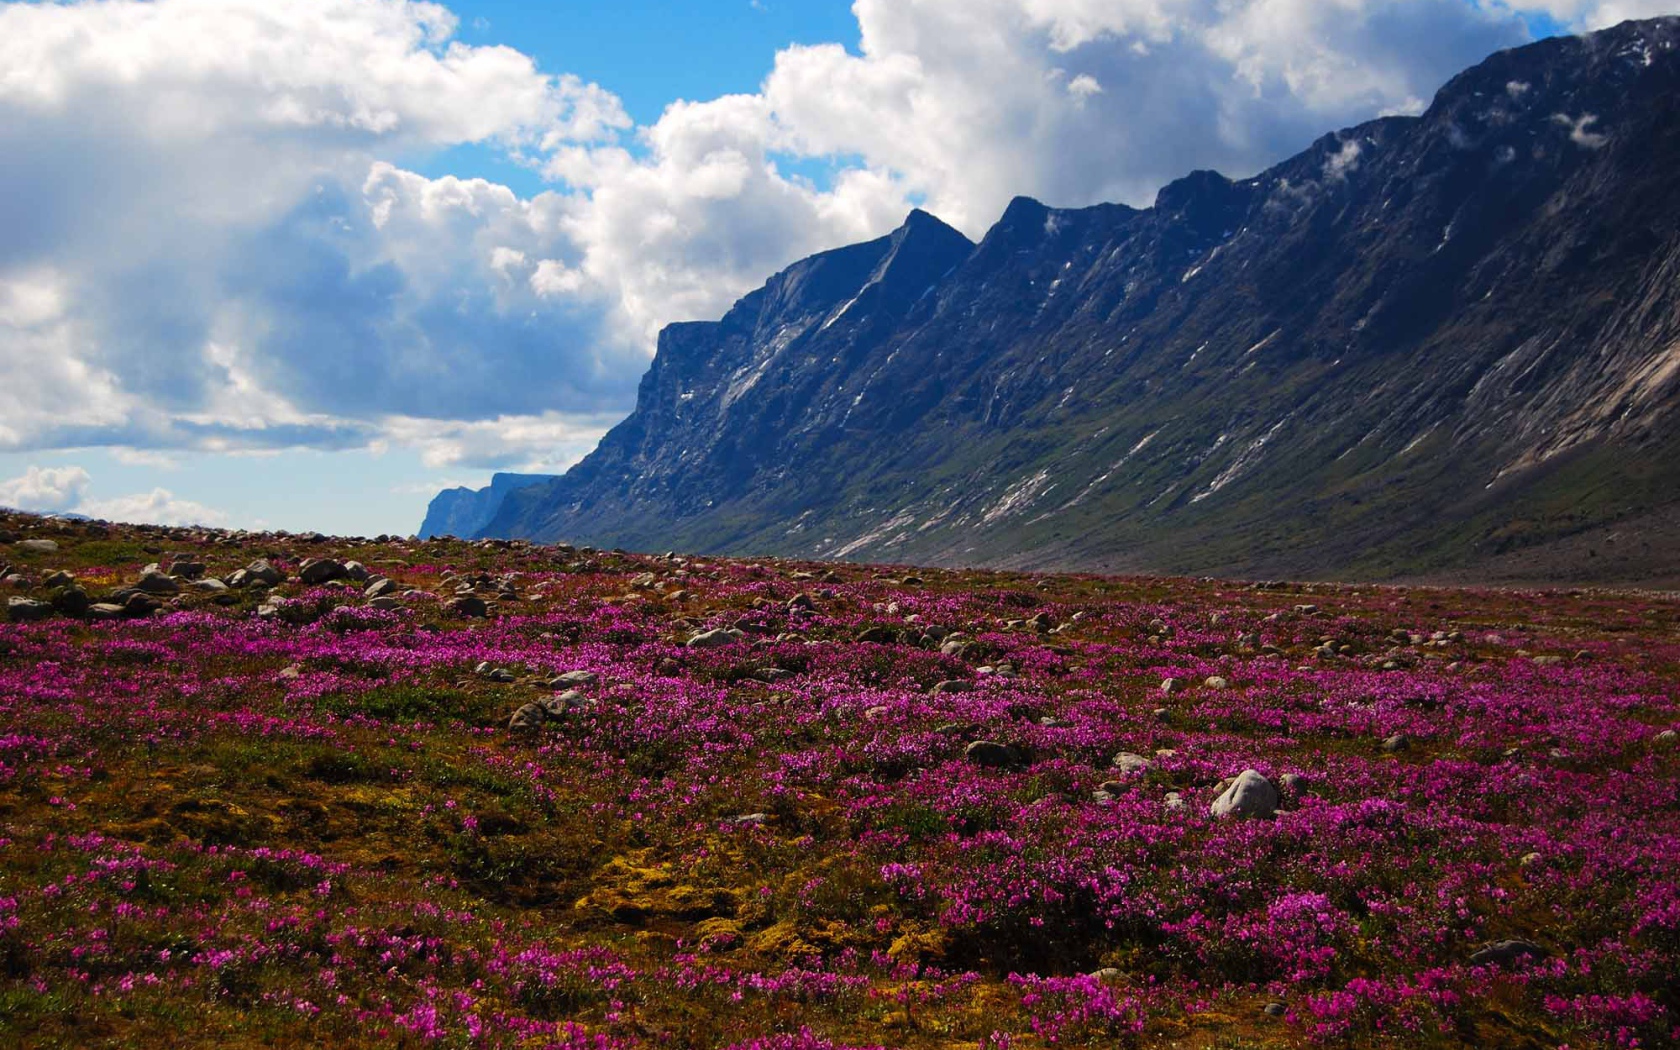 Цветущая природа национального парка Ауюиттук, Канада 